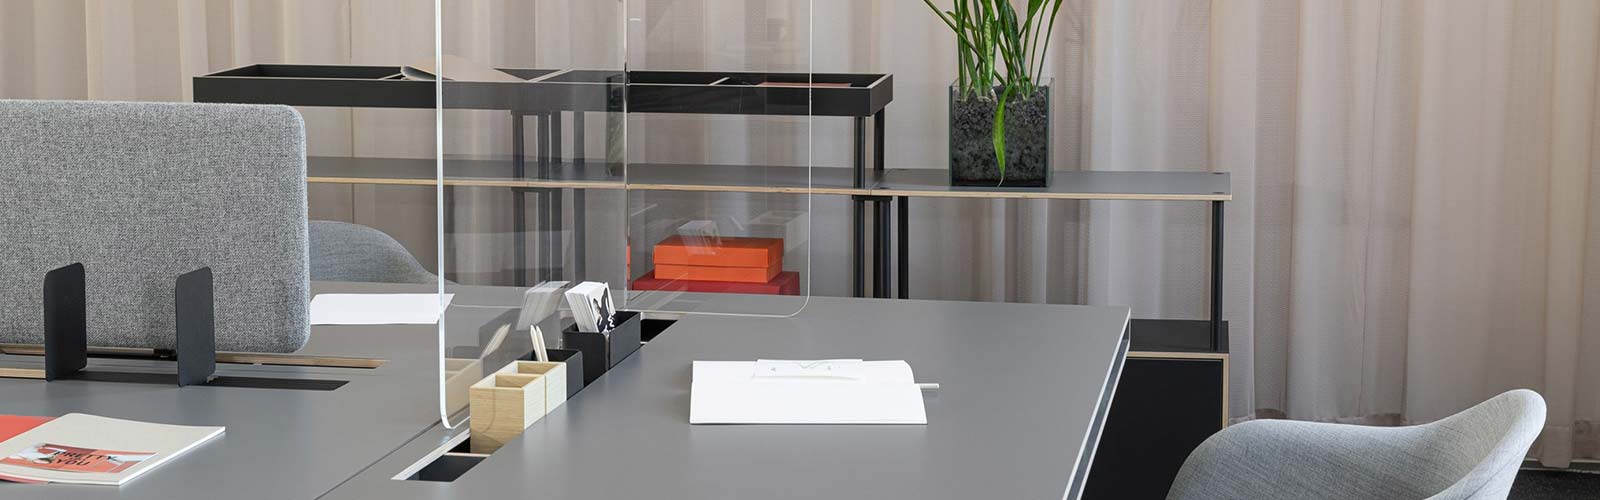 Bene Shielded protective glass desk screen COVID 19 sneeze guard solution